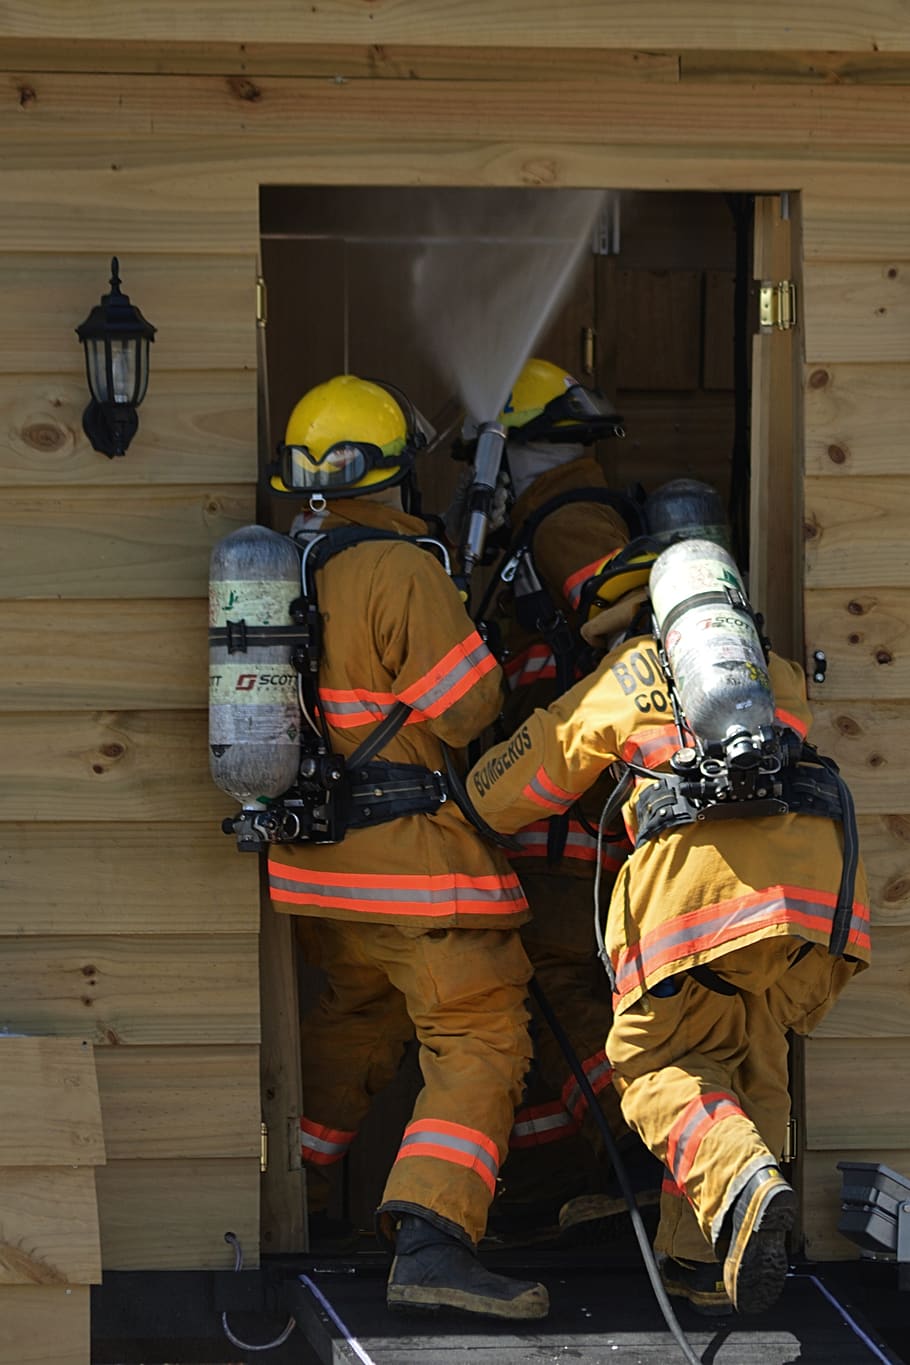 bombero, trabajo, fuego, equipo, protección, casco, servicio, peligro, vivir, capacitación